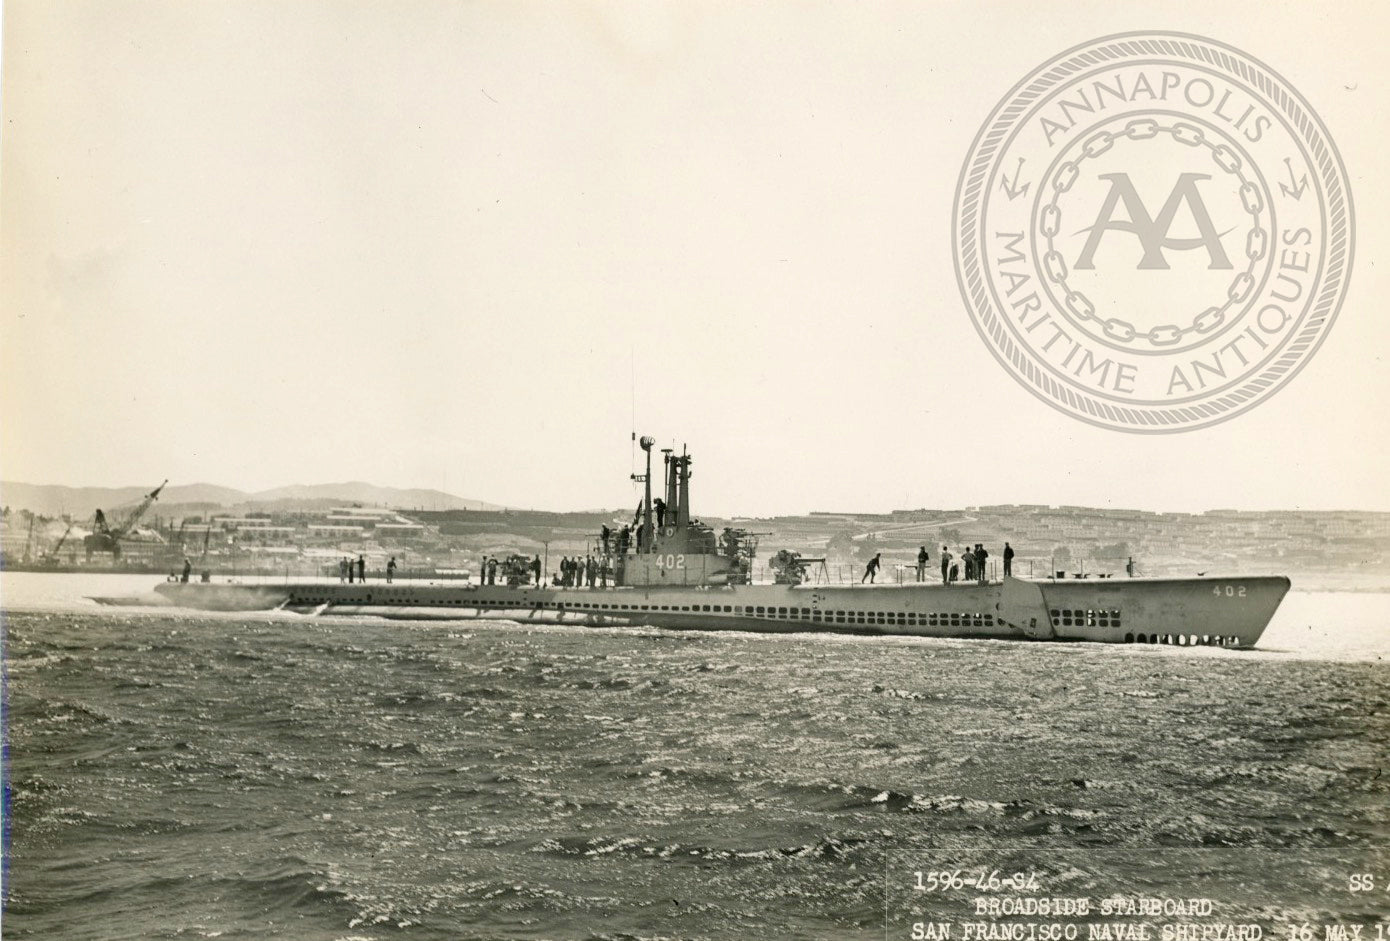 USS SEA FOX (SS-402) Submarine